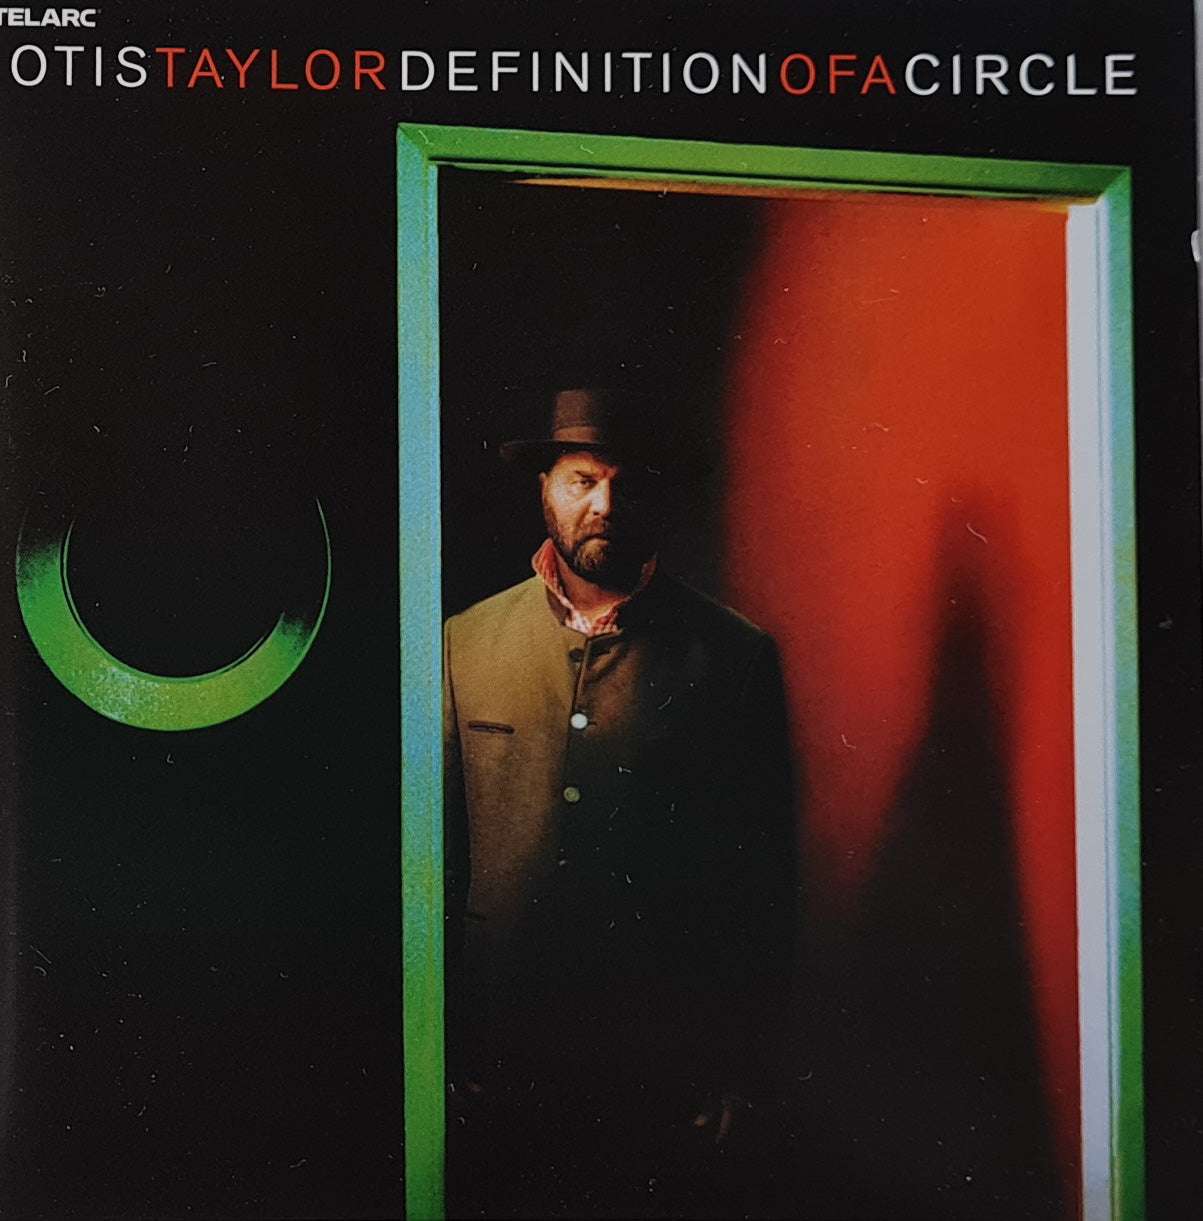 Otis Taylor - Definition of a Circle (CD)